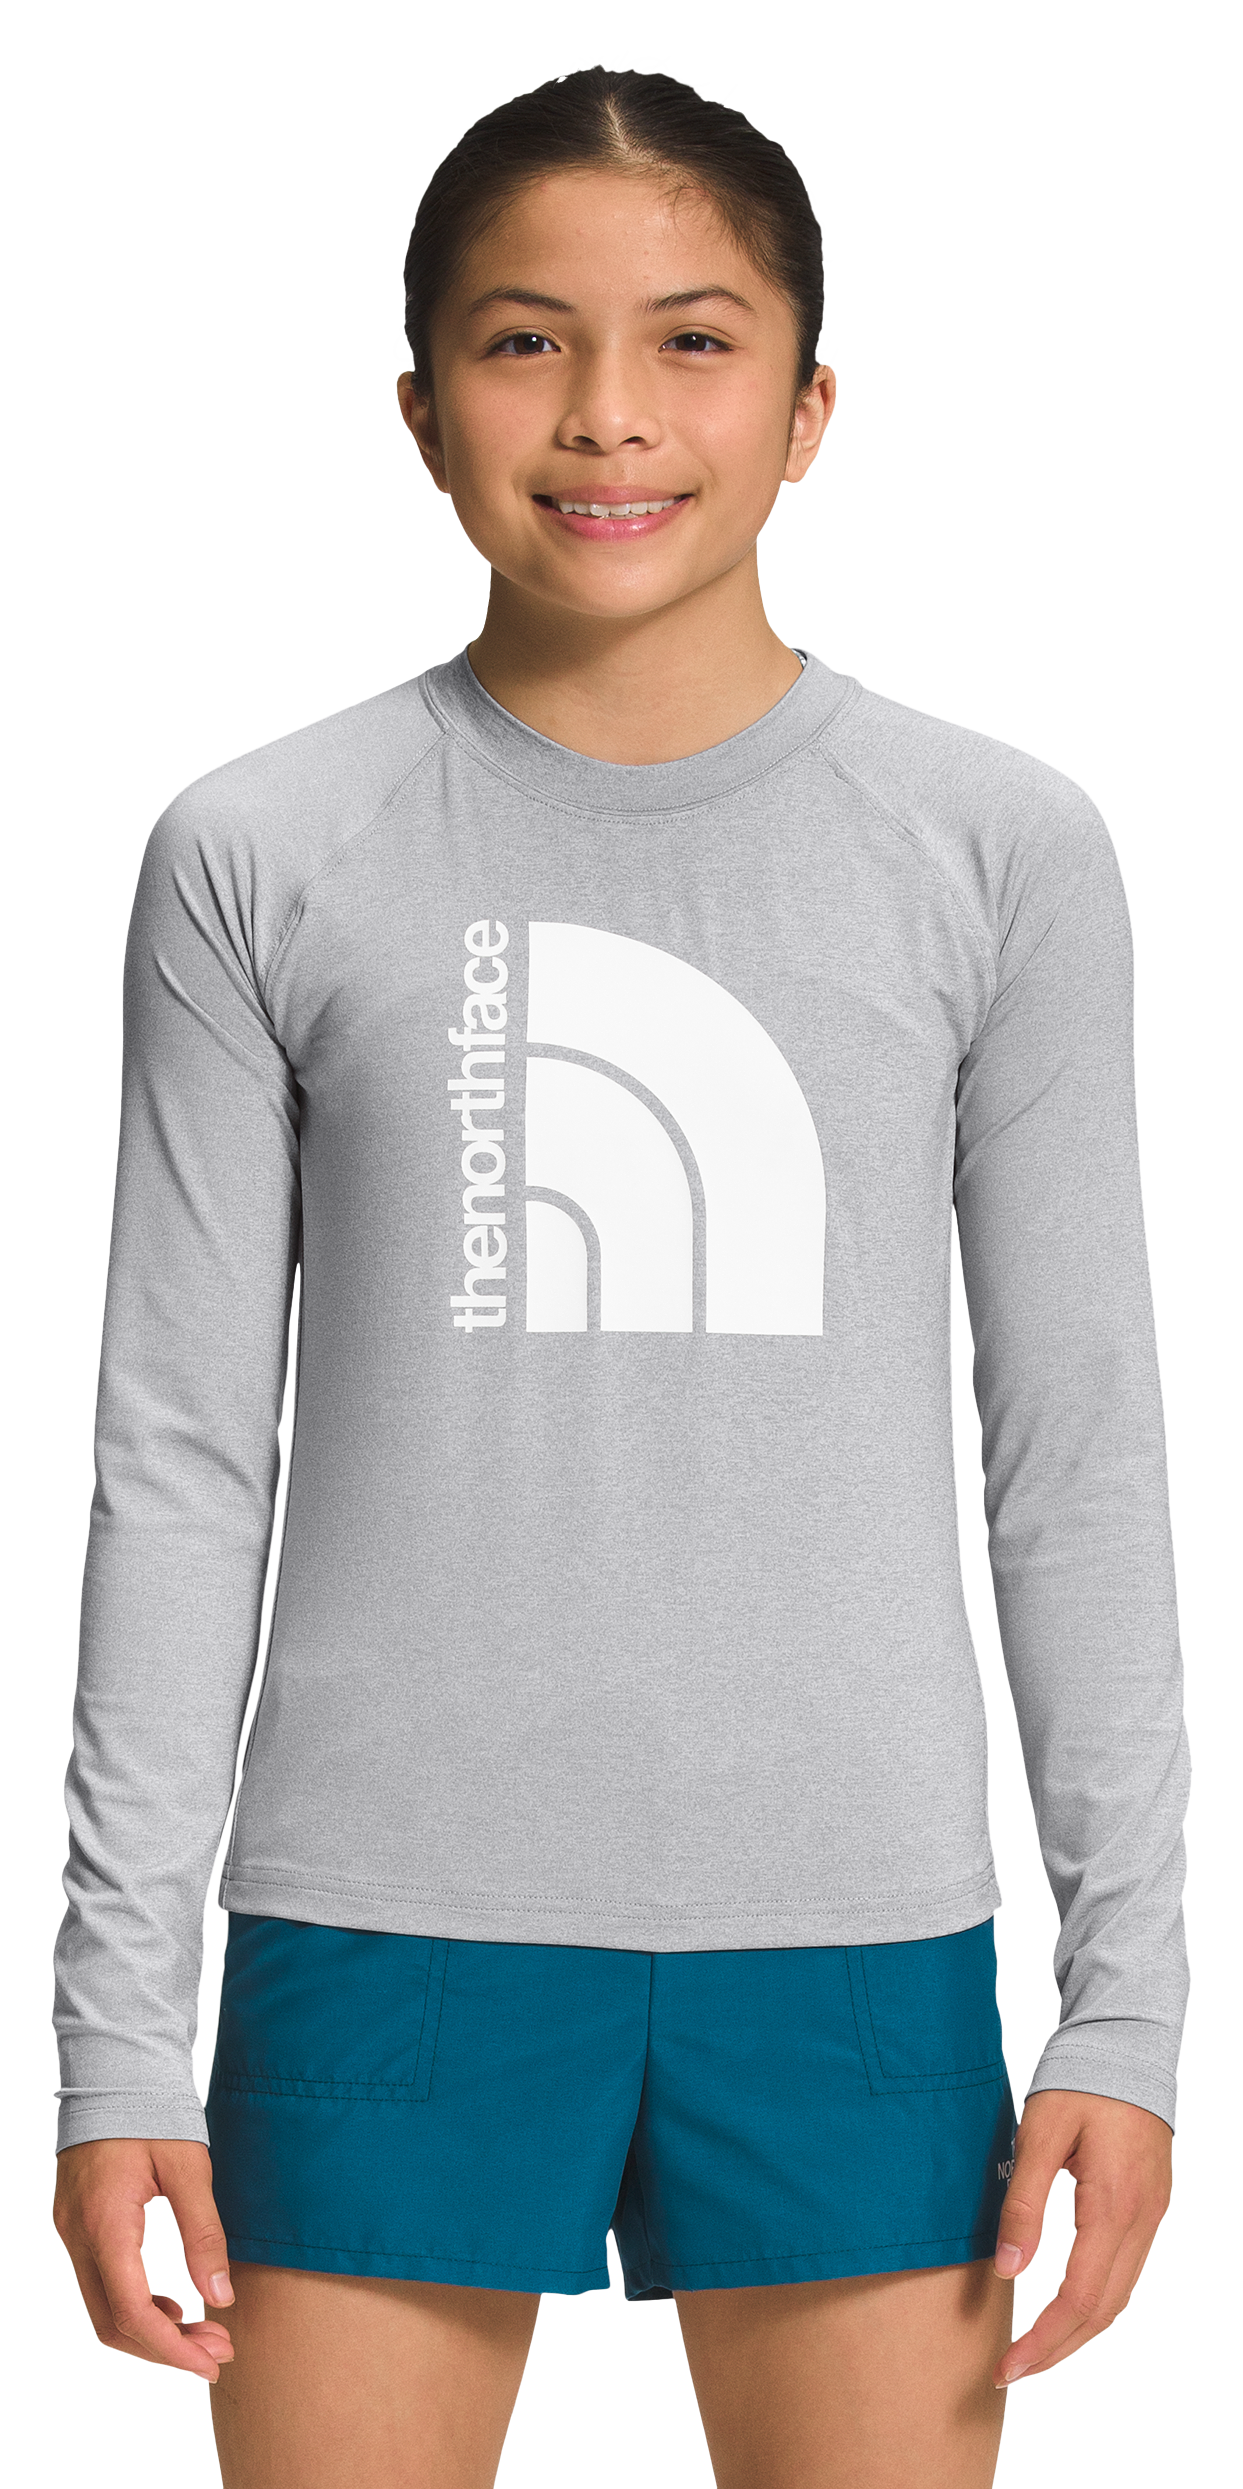 The North Face Amphibious Long-Sleeve Sun T-Shirt for Kids